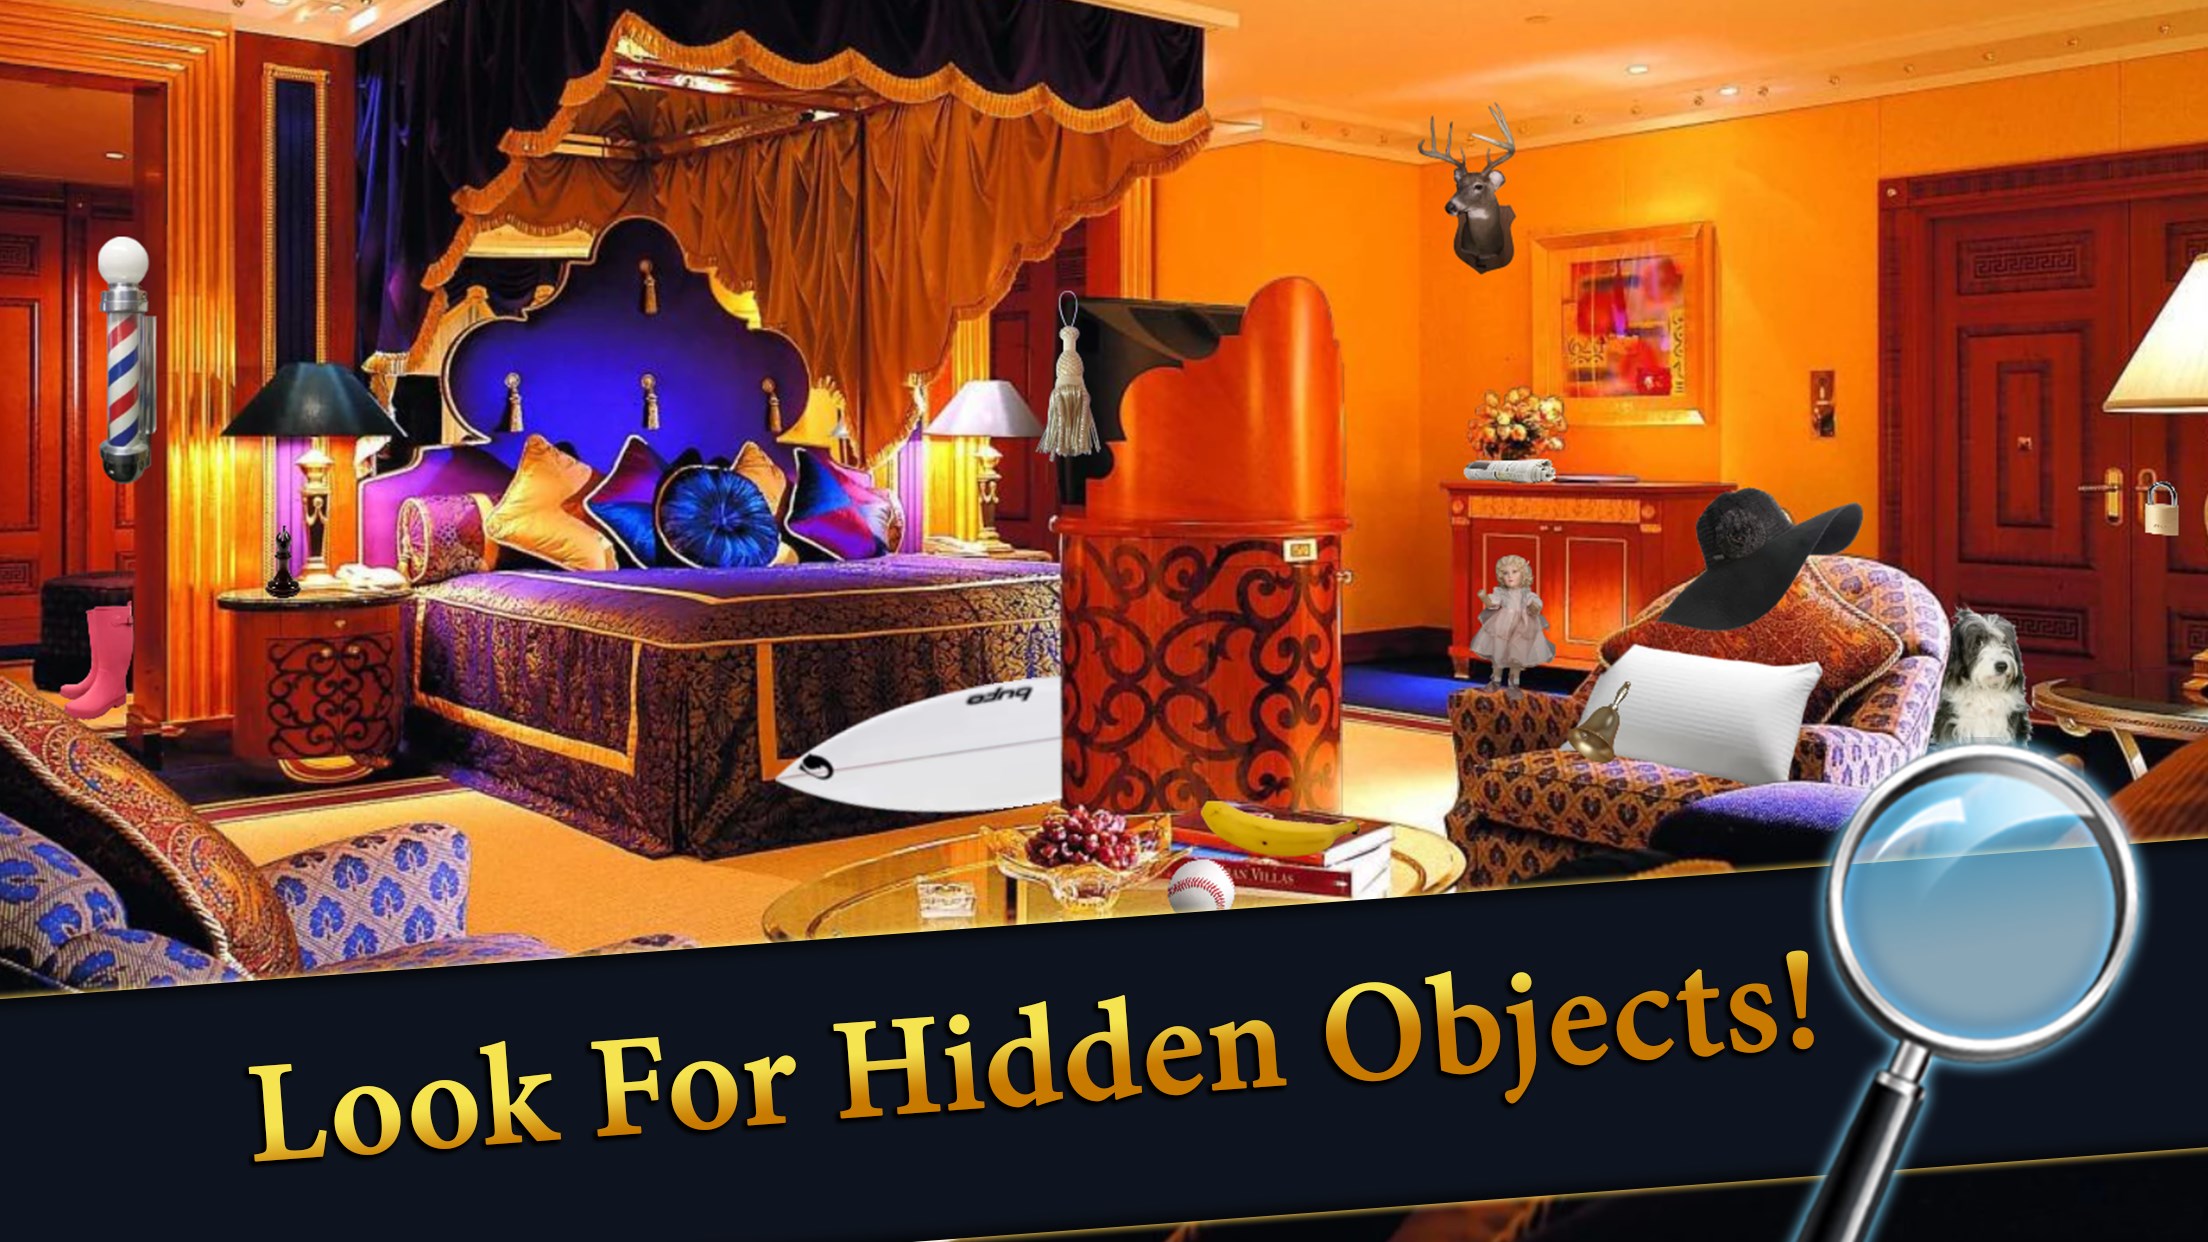 Hidden Objects: Blackstone Mysteries